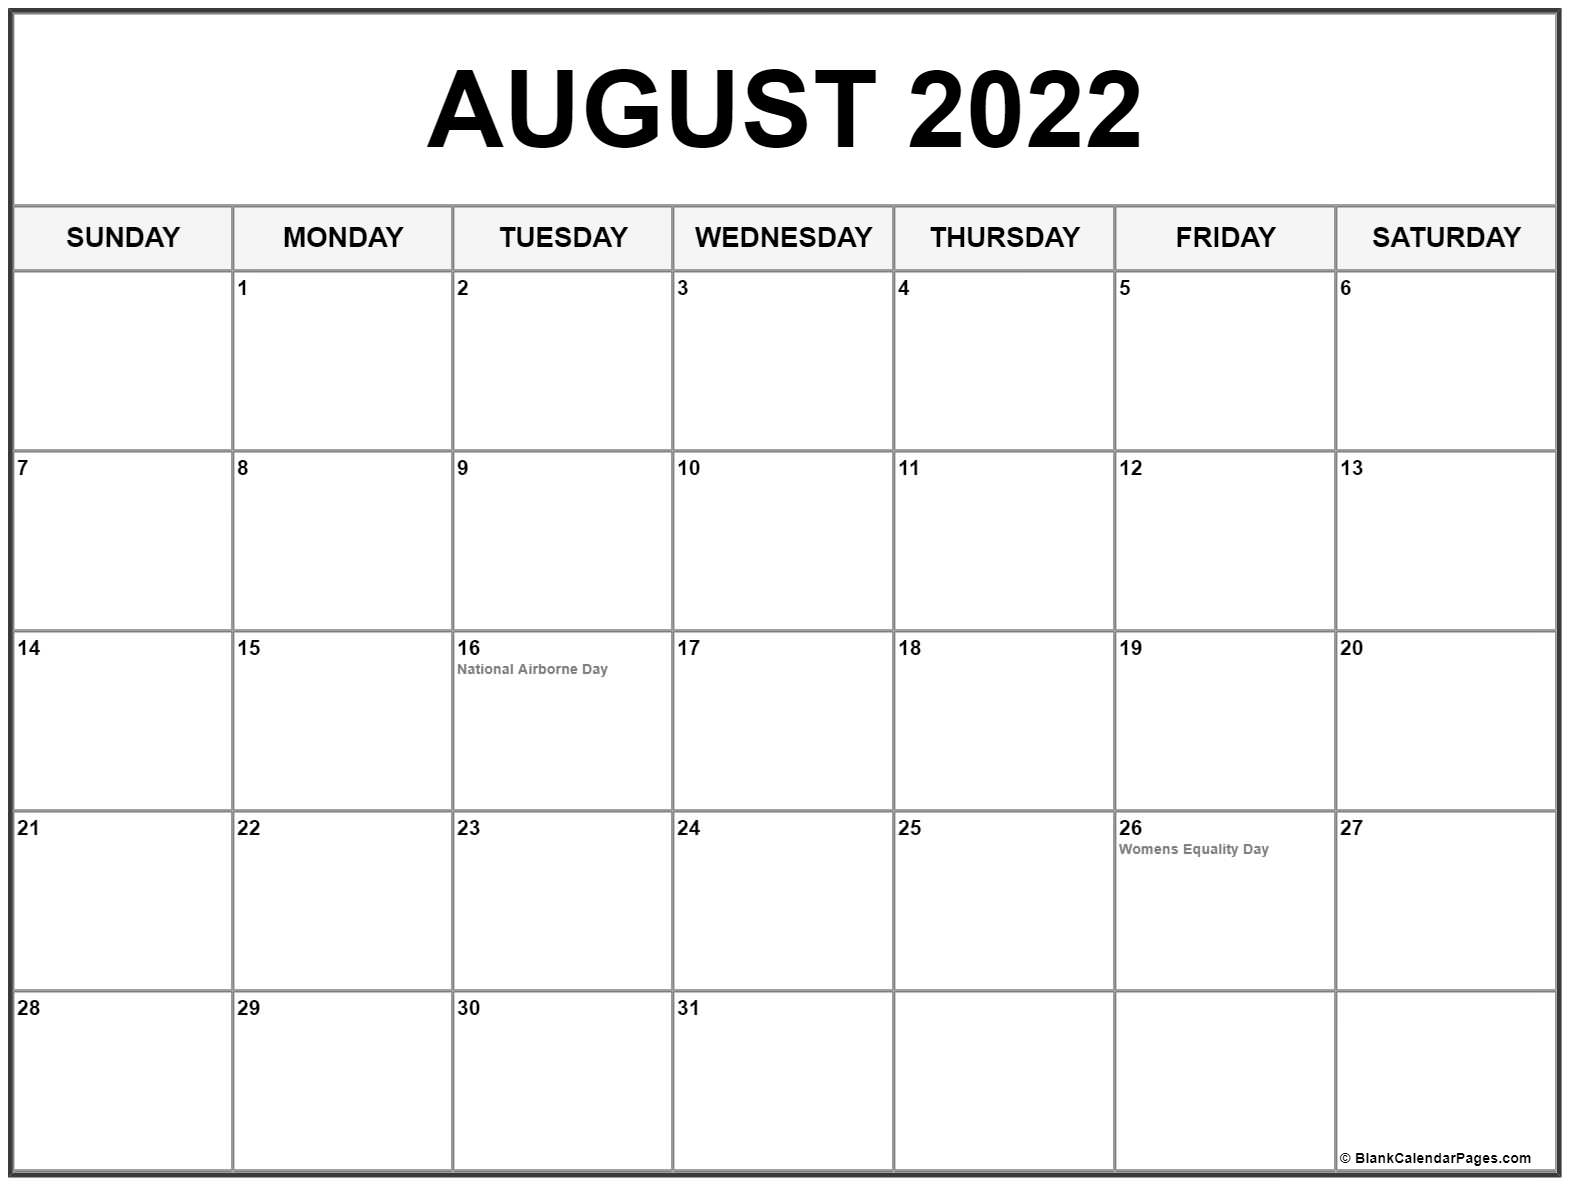 Get January 16 2022 Calendar